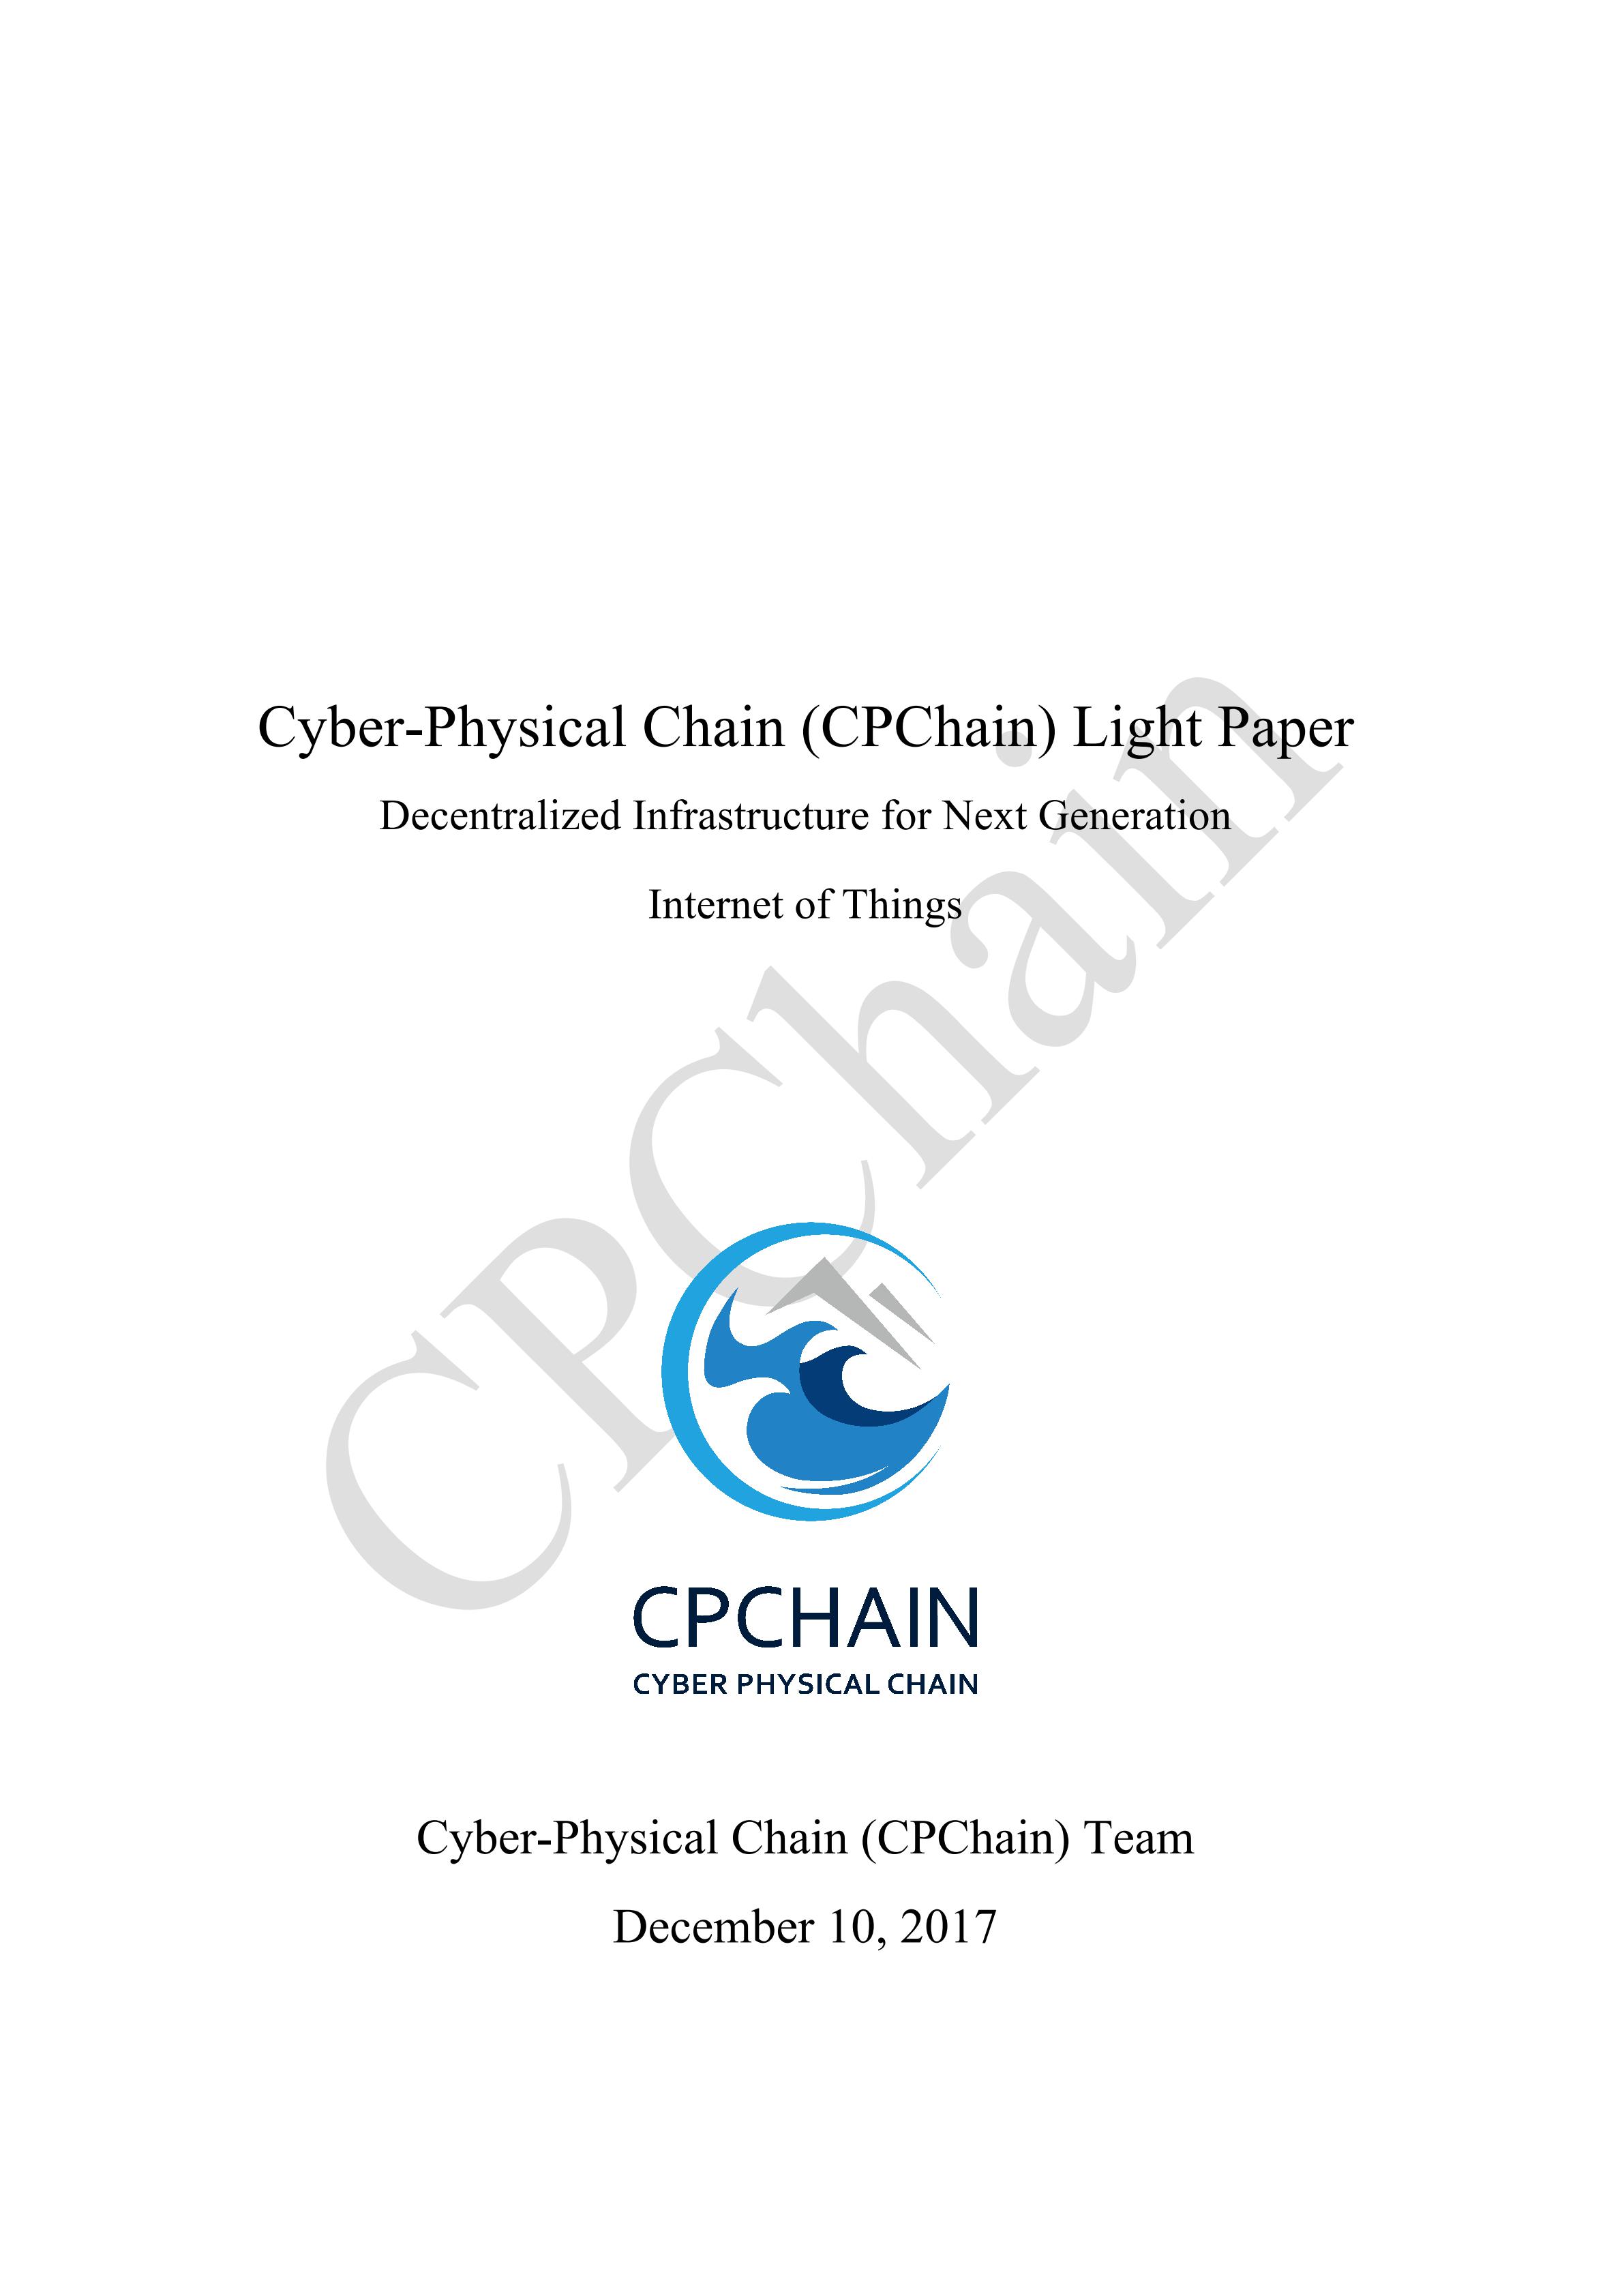 CPChain_lightpaper_English_00.jpg